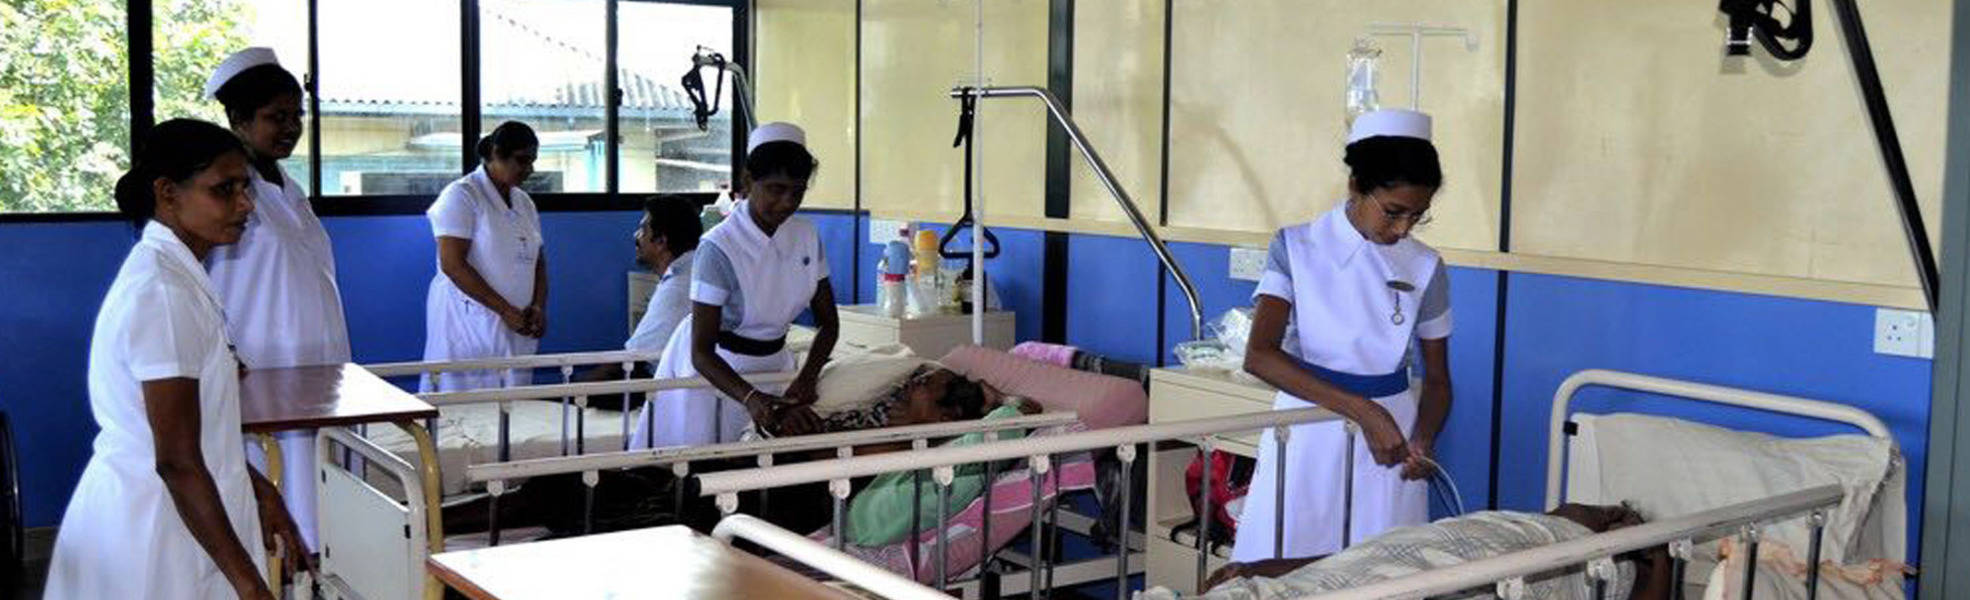 Pflegepraktikum in einem Krankenhaus in Sri Lanka